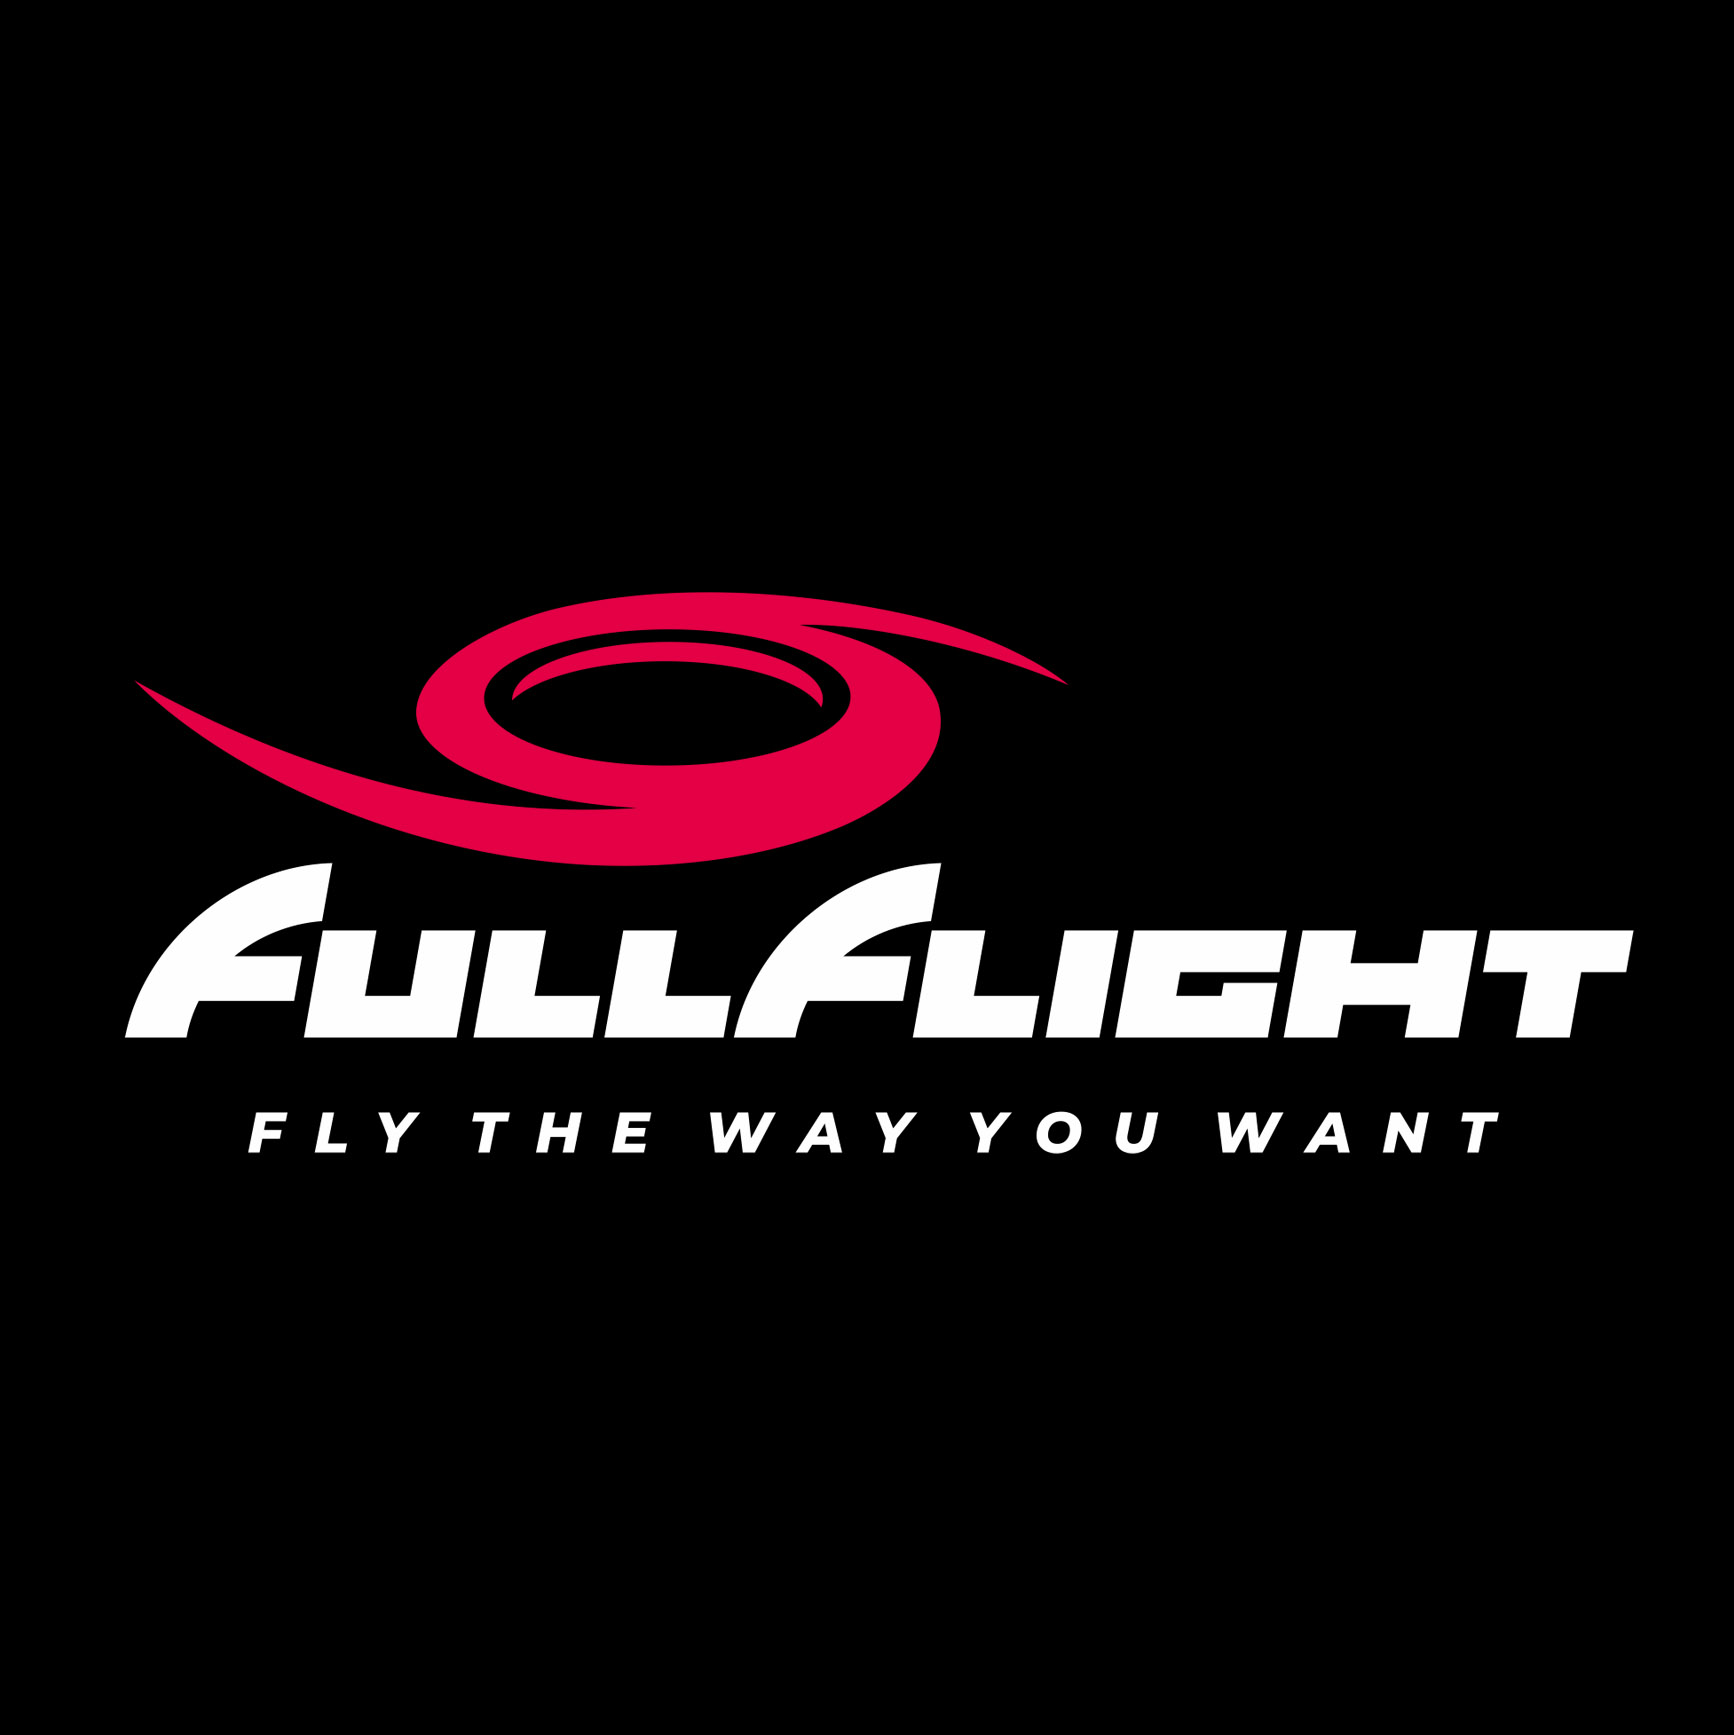 FullFlight logo Therwiz Design